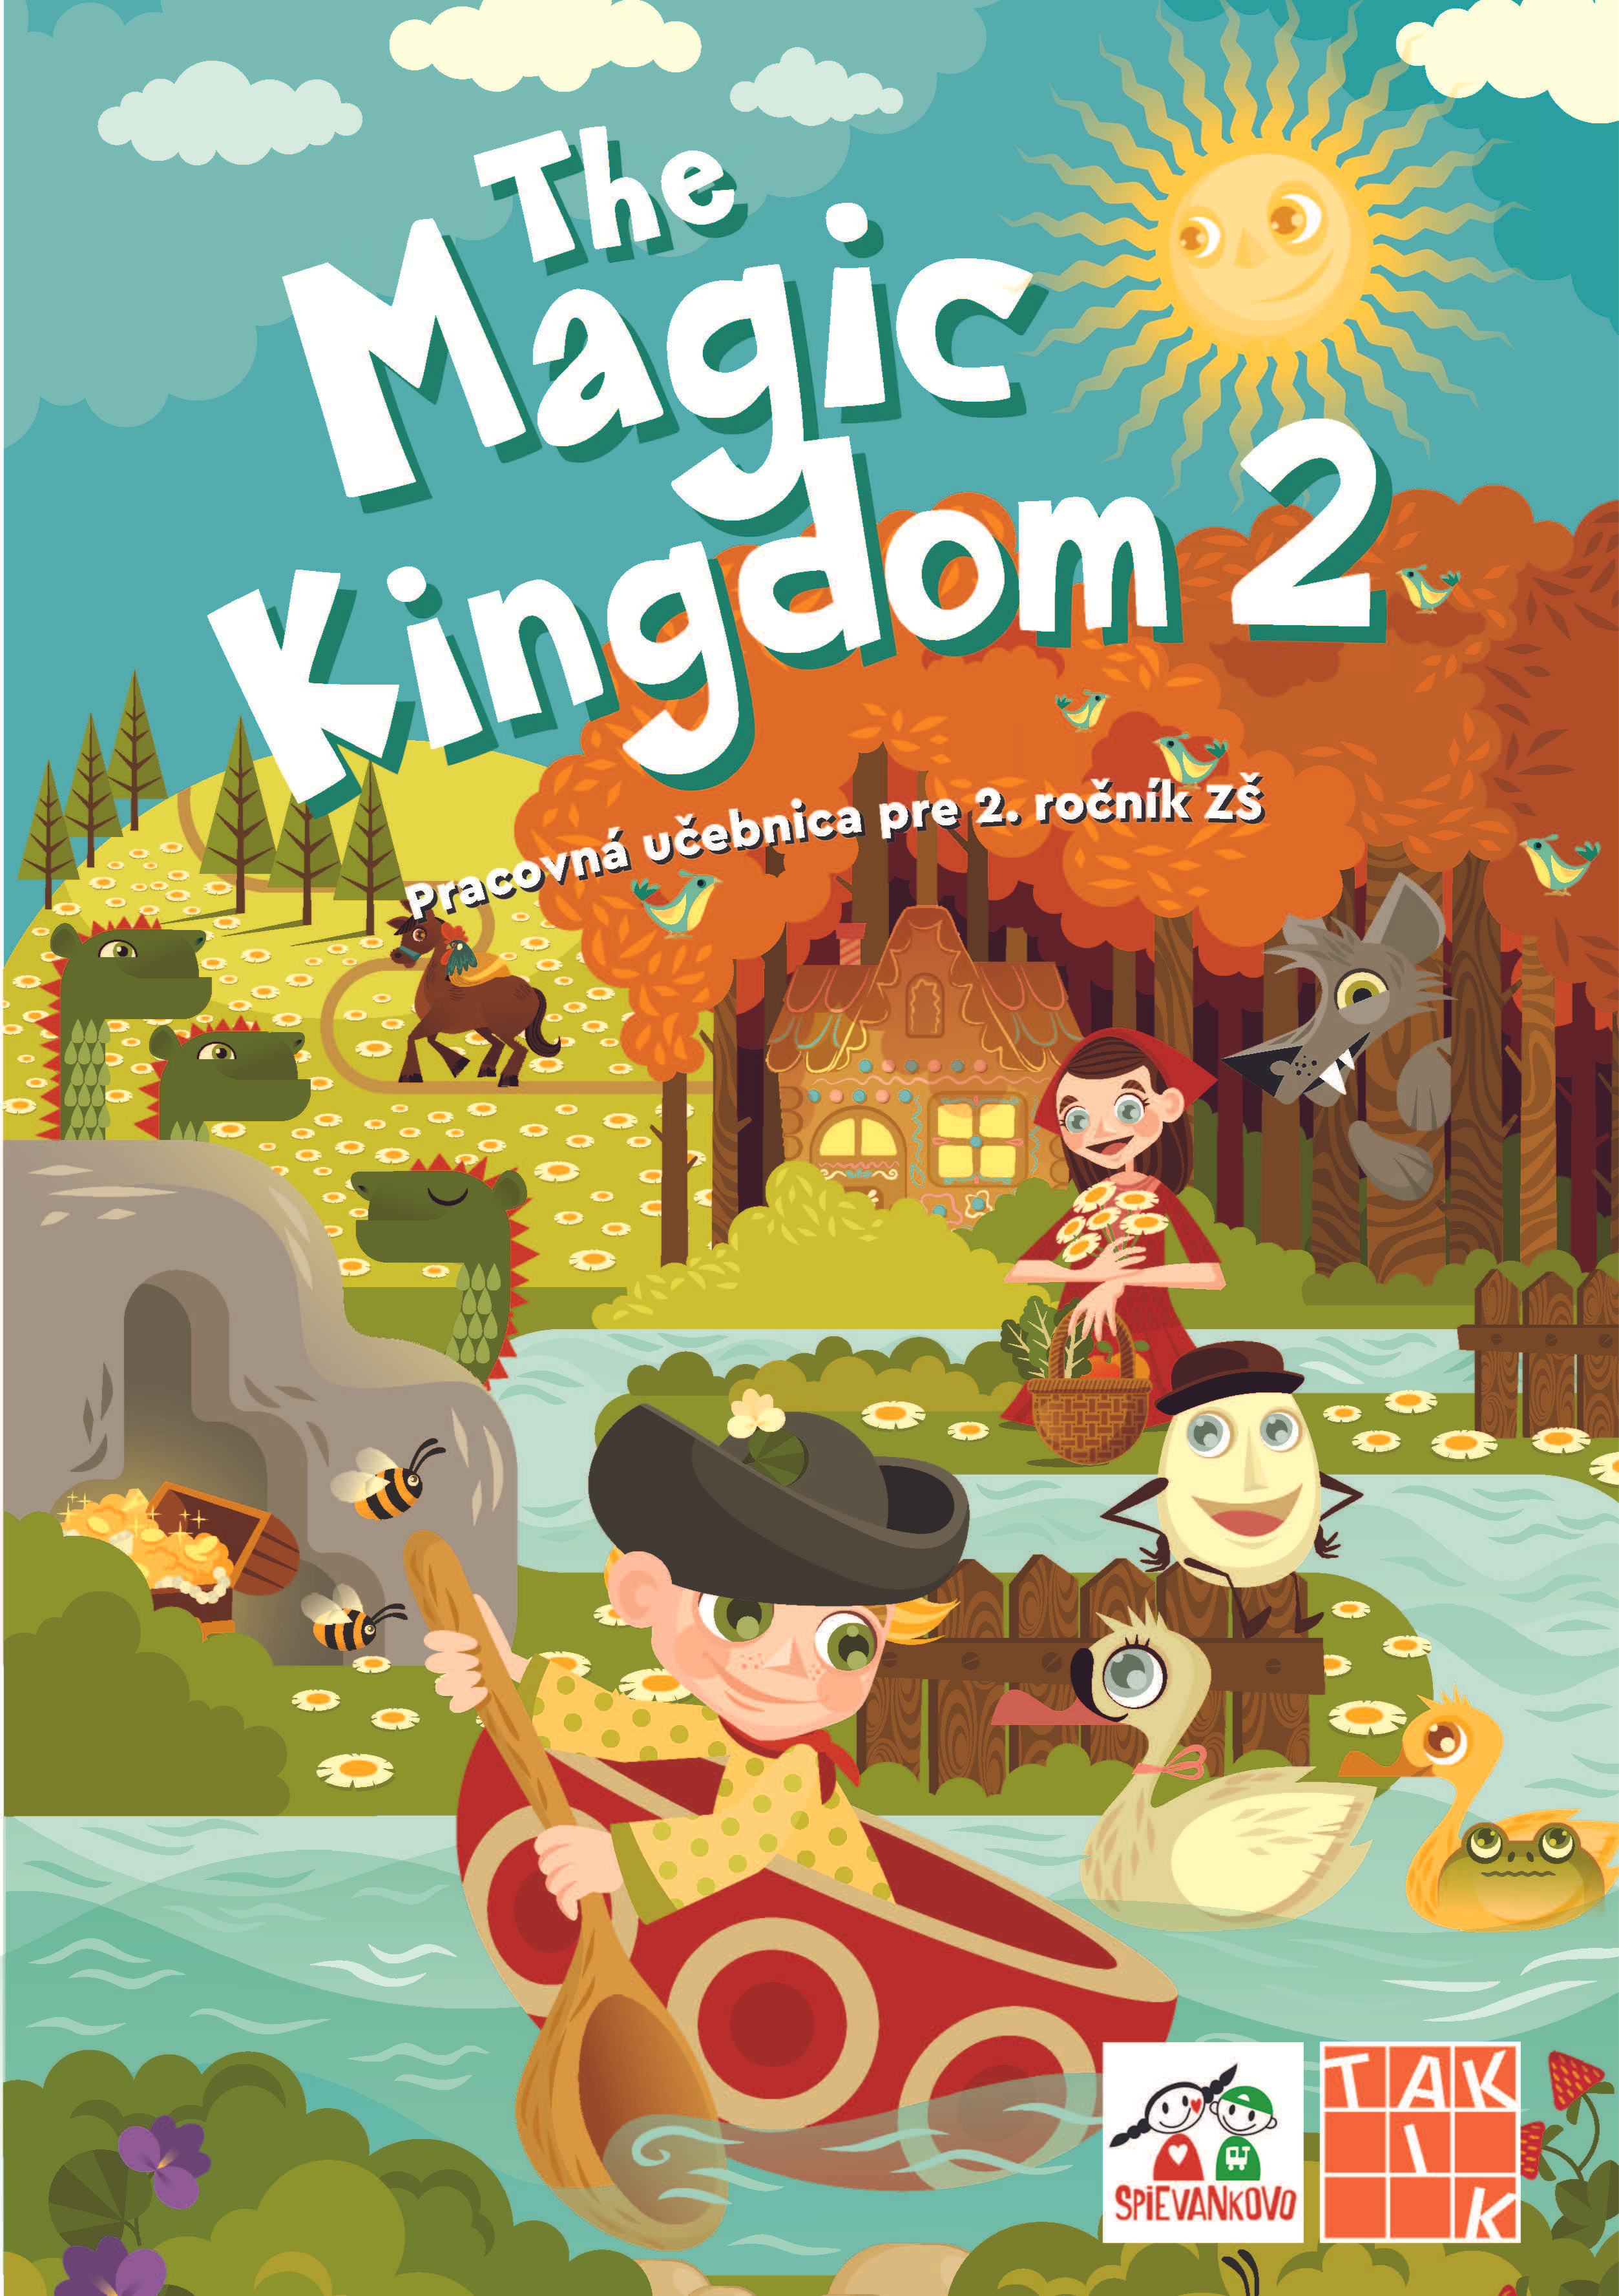 The Magic Kingdom 2